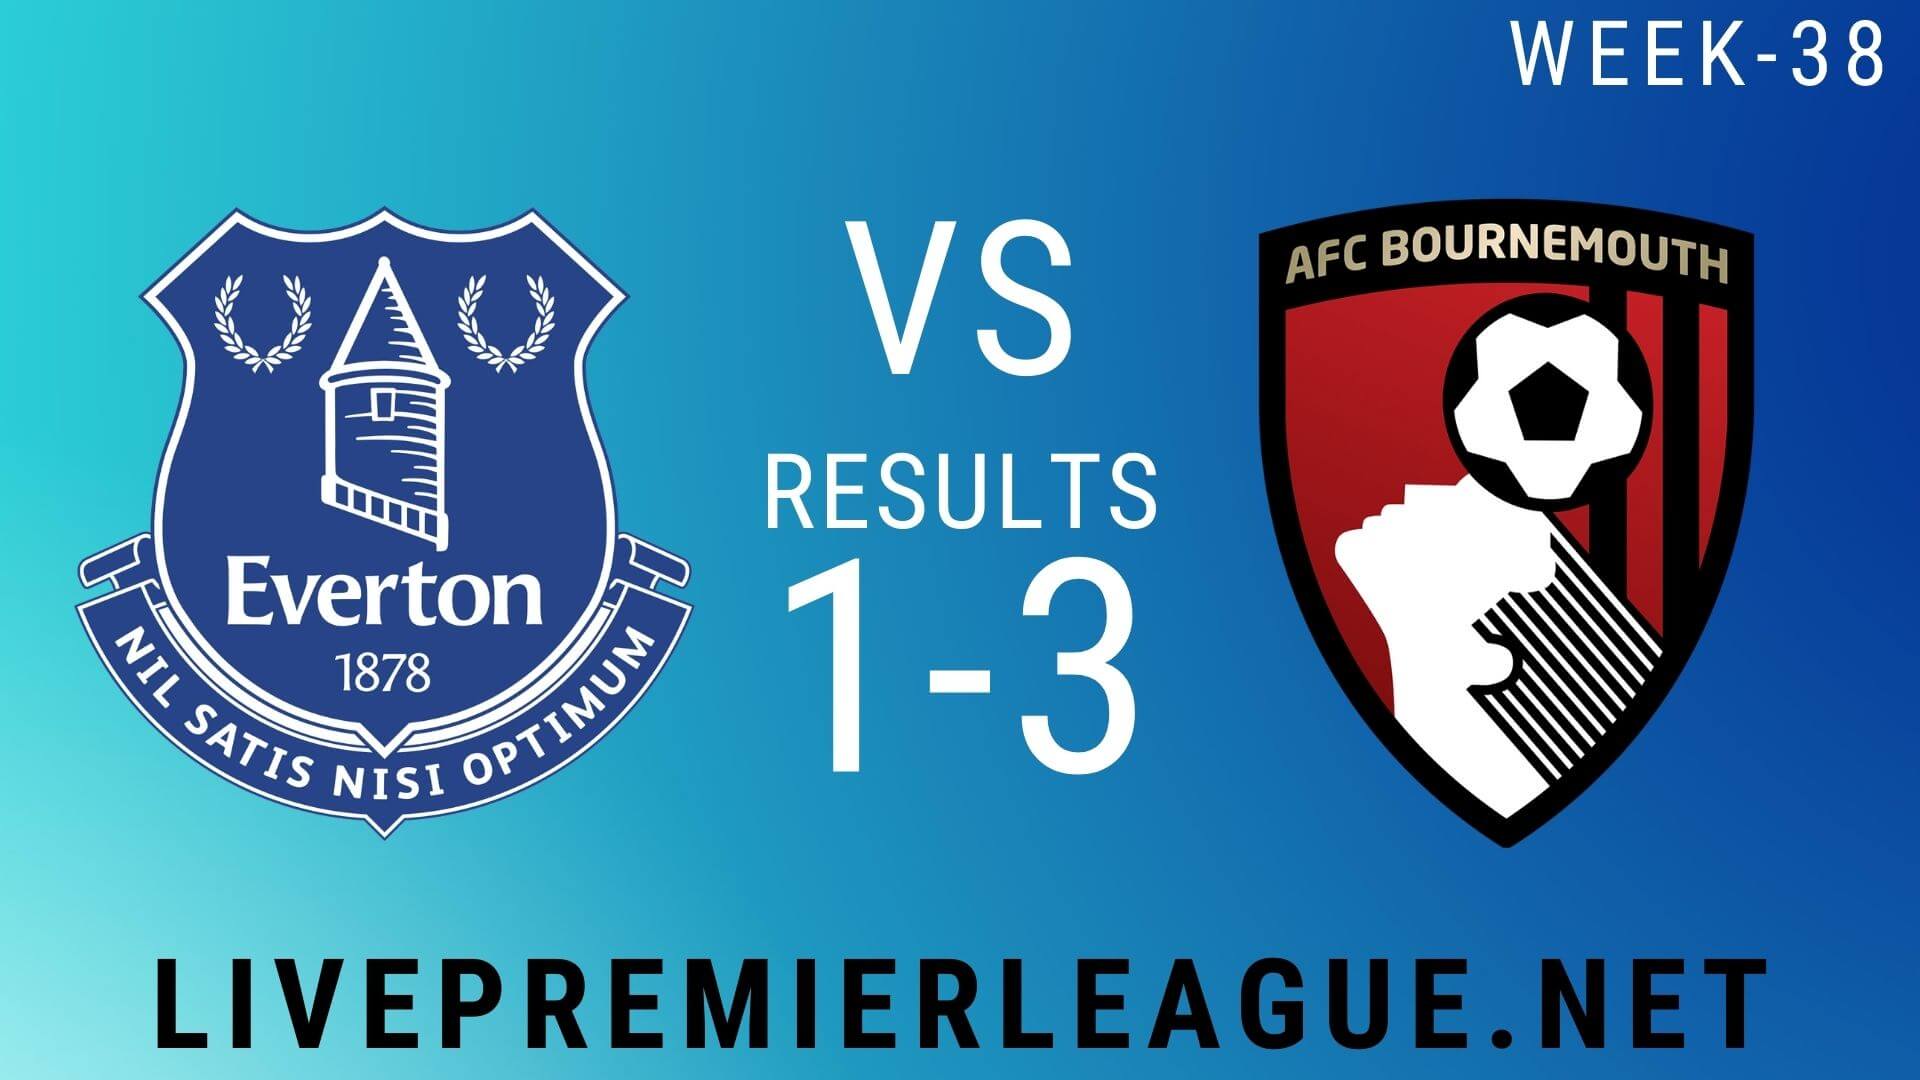 Everton Vs AFC Bournemouth | Week 38 Result 2020